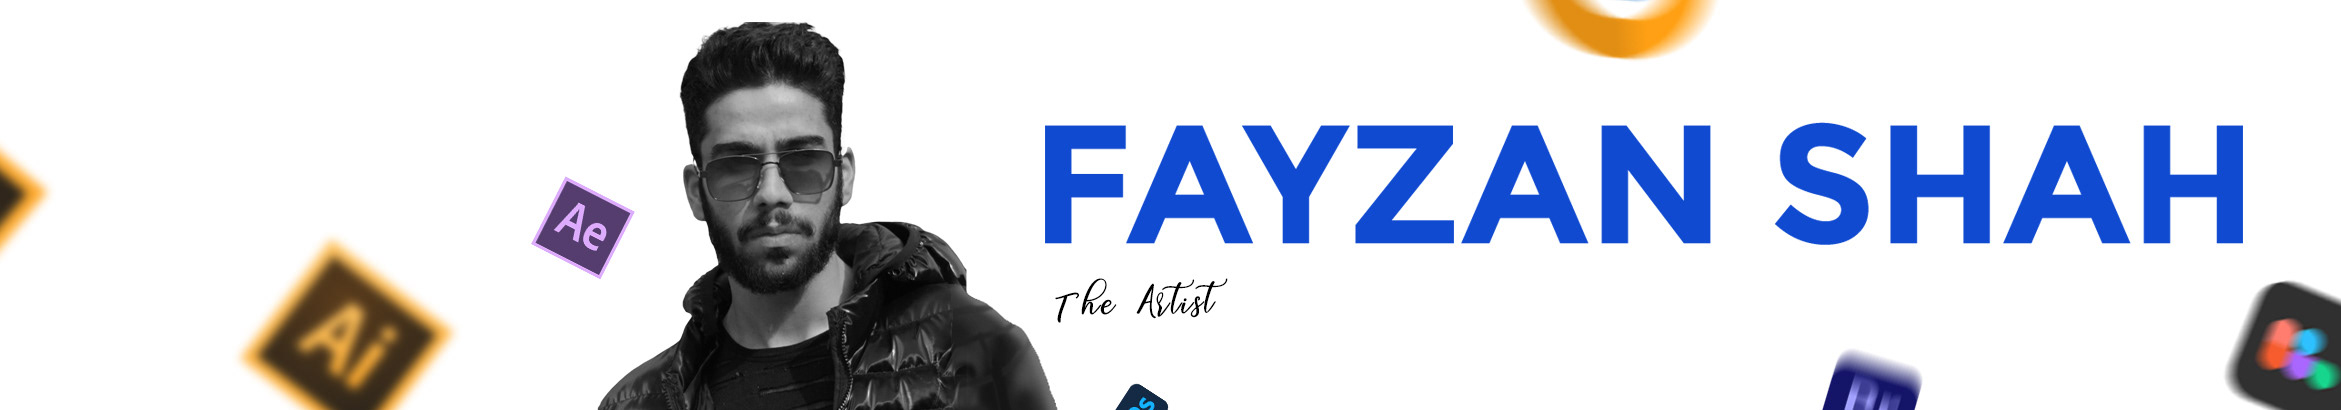 Profielbanner van Fayzan Shah